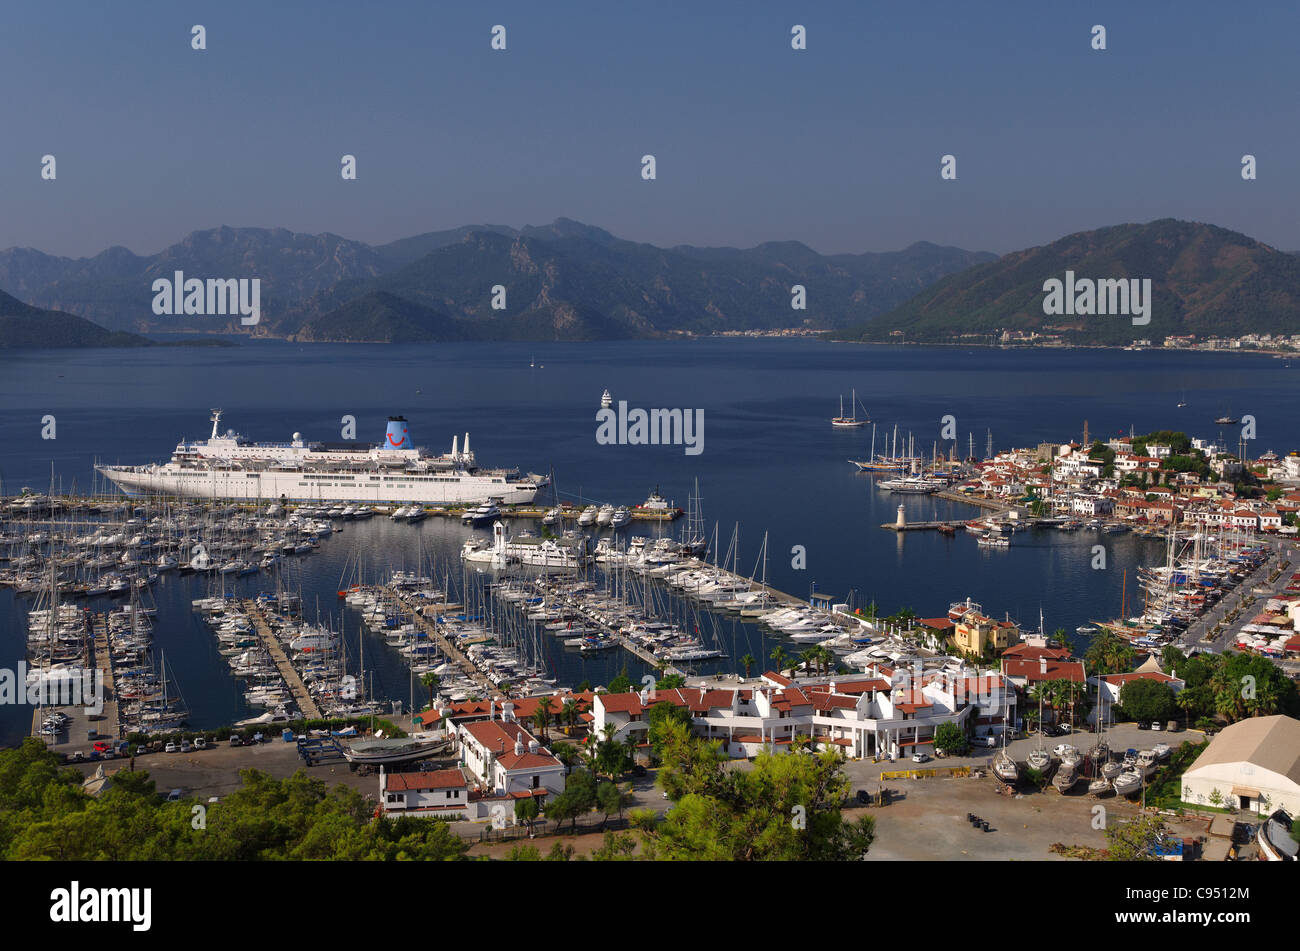 Port of Marmaris, Turkey. Old town with marina and cruise ship Thomson Celebration on quay. Stock Photo